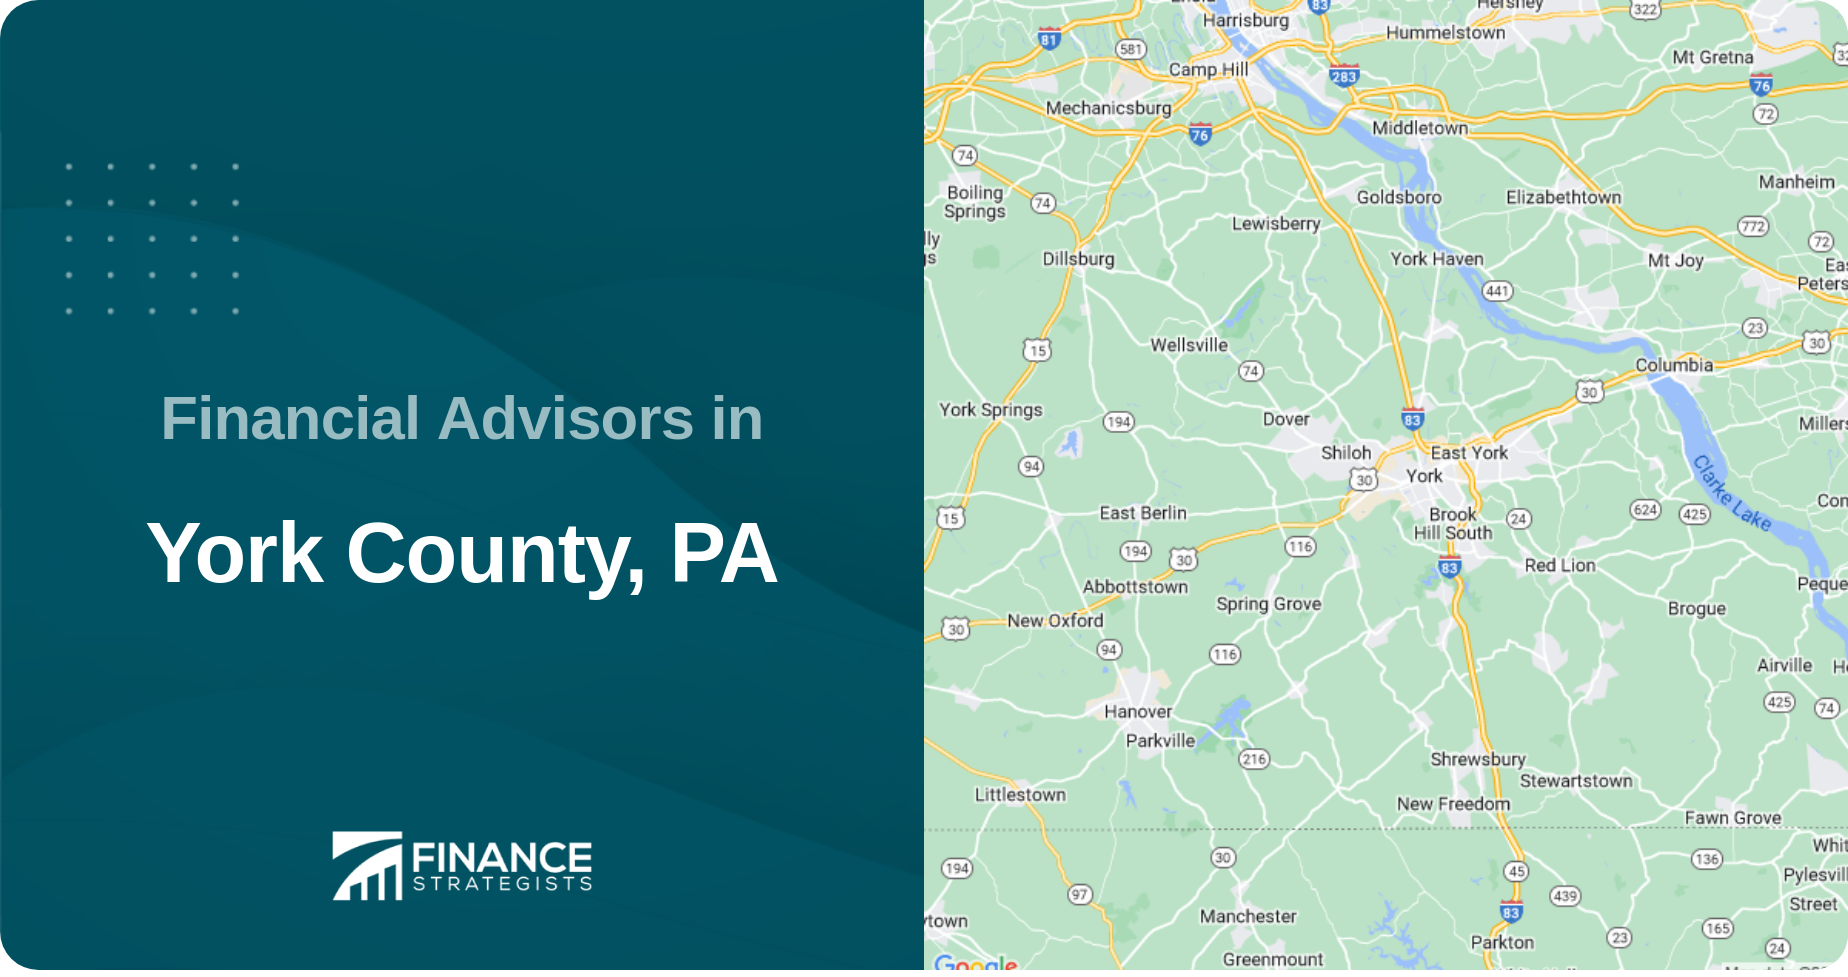 Financial Advisors in York County, PA